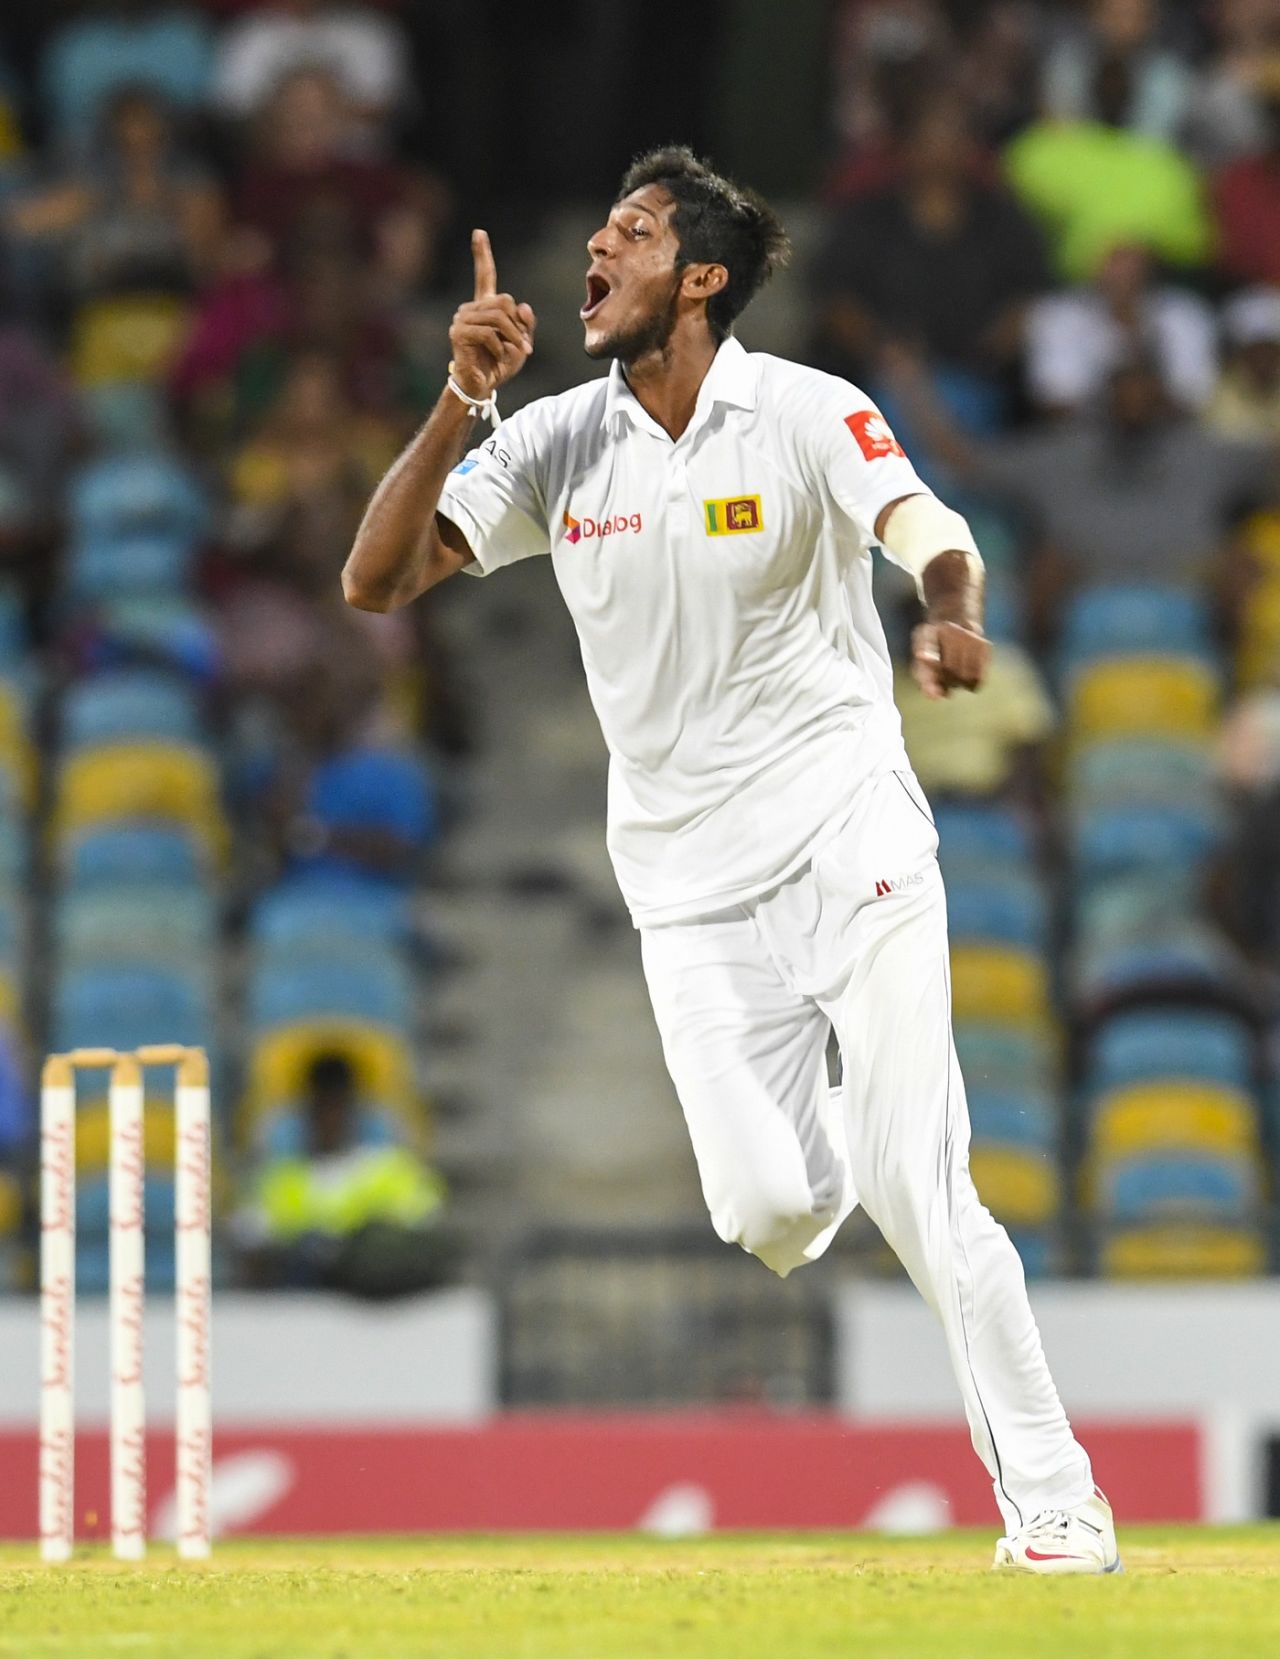 Kasun Rajitha exults after taking a wicket, West Indies v Sri Lanka, 3rd Test, Barbados, 3rd day, June 25, 2018